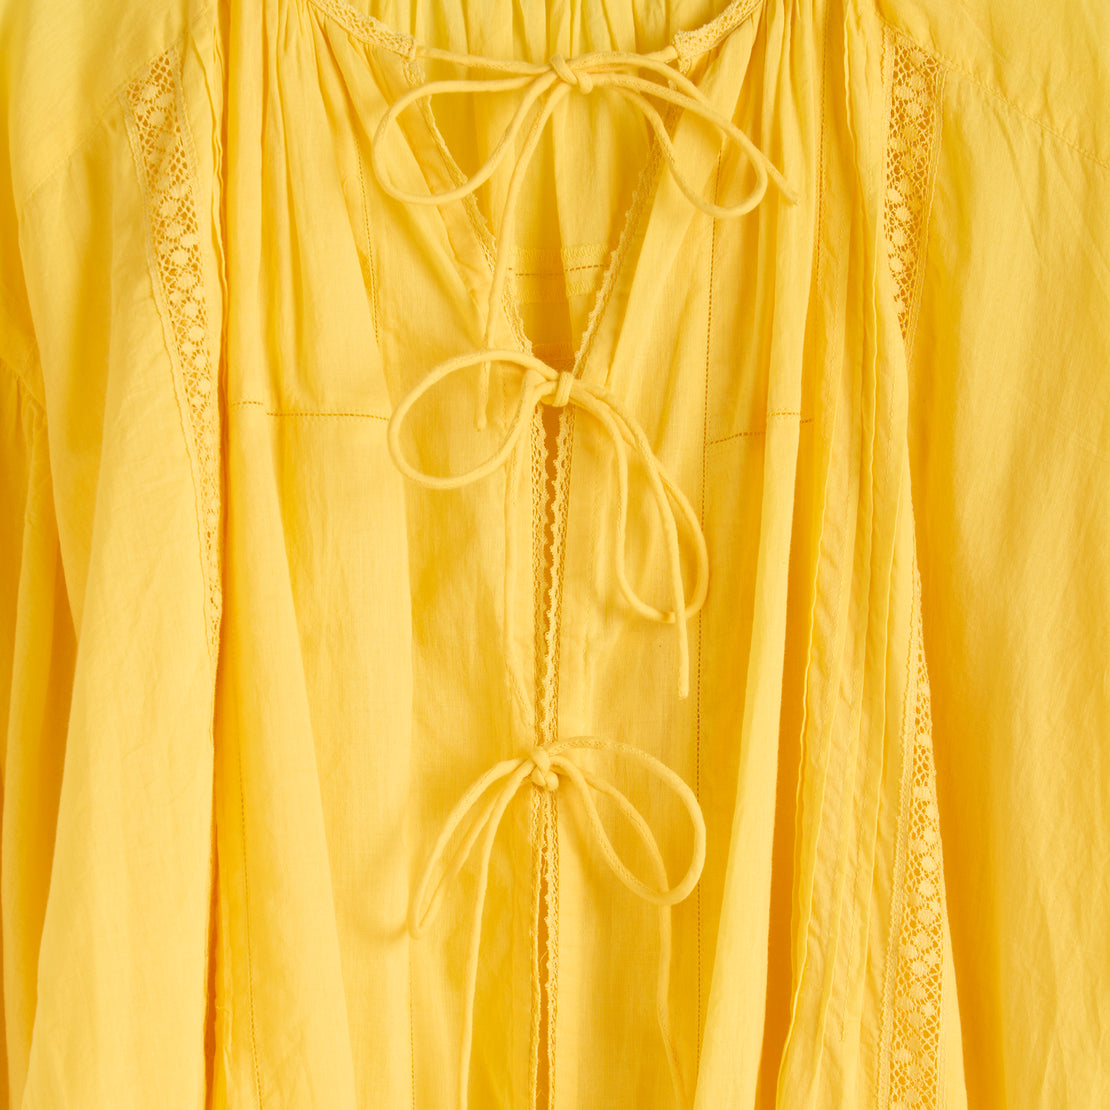 Oversized VinLace Dress - Yellow